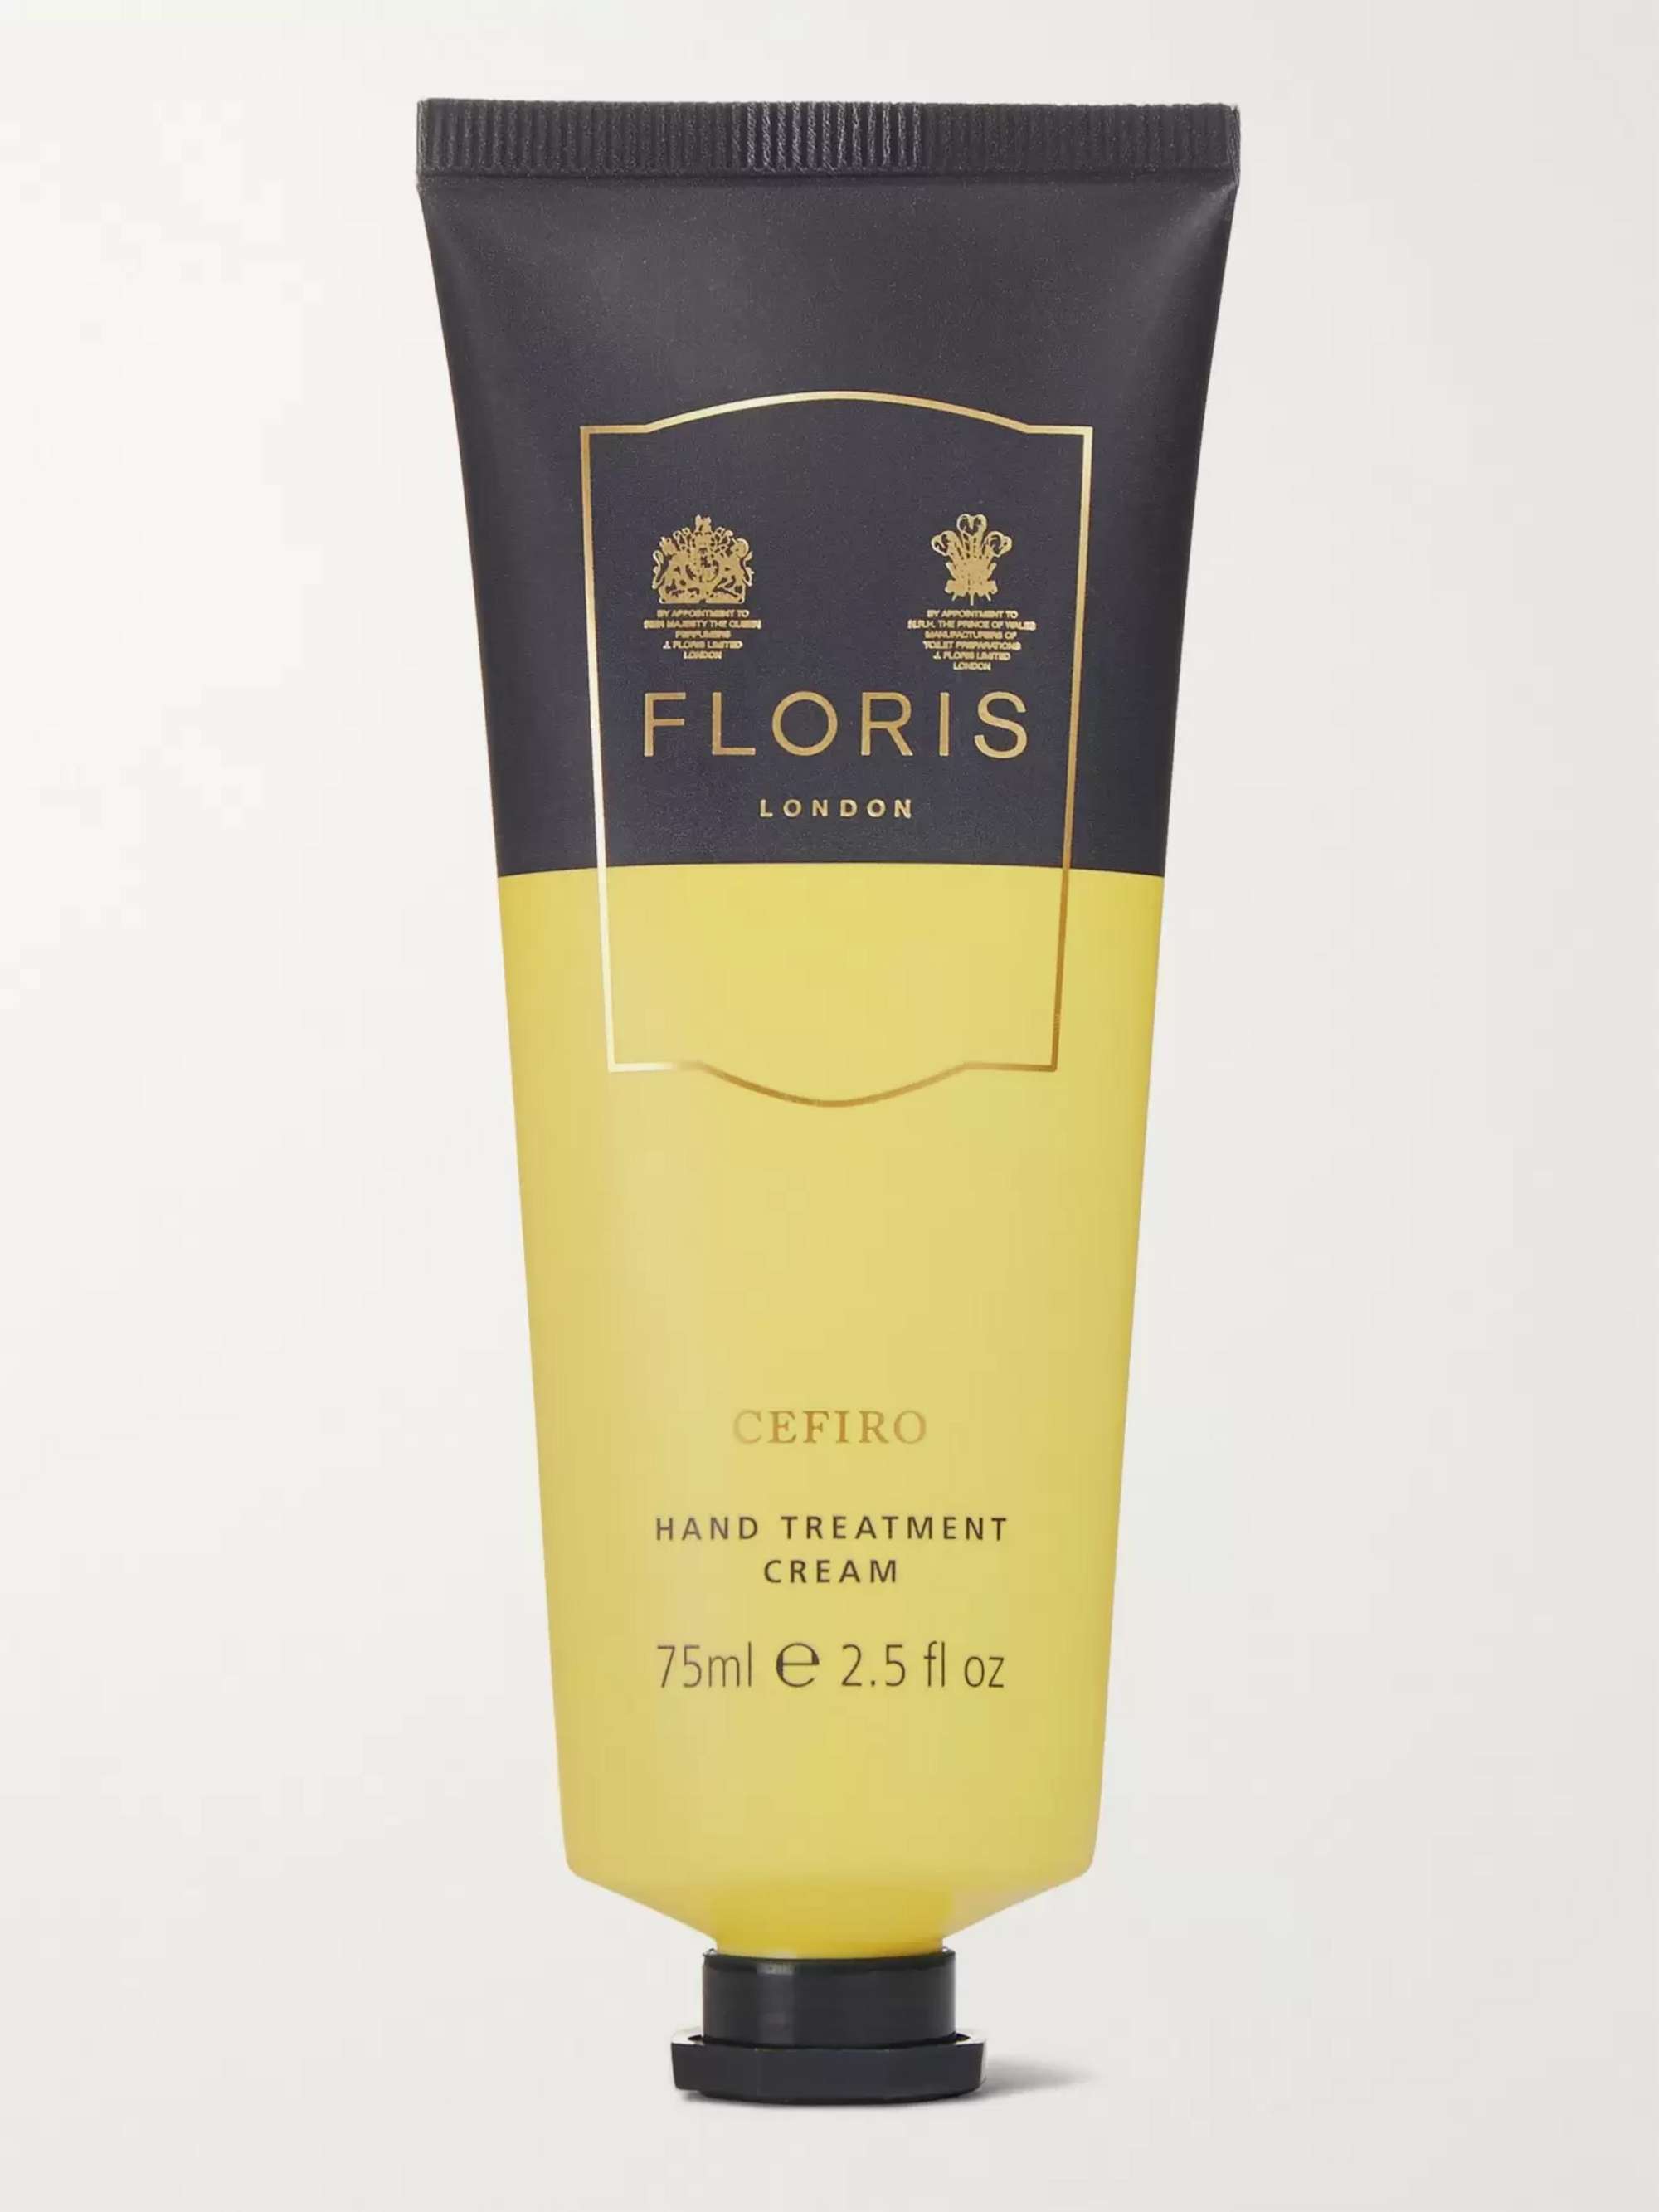 FLORIS LONDON Cefiro Hand Treatment Cream, 75ml